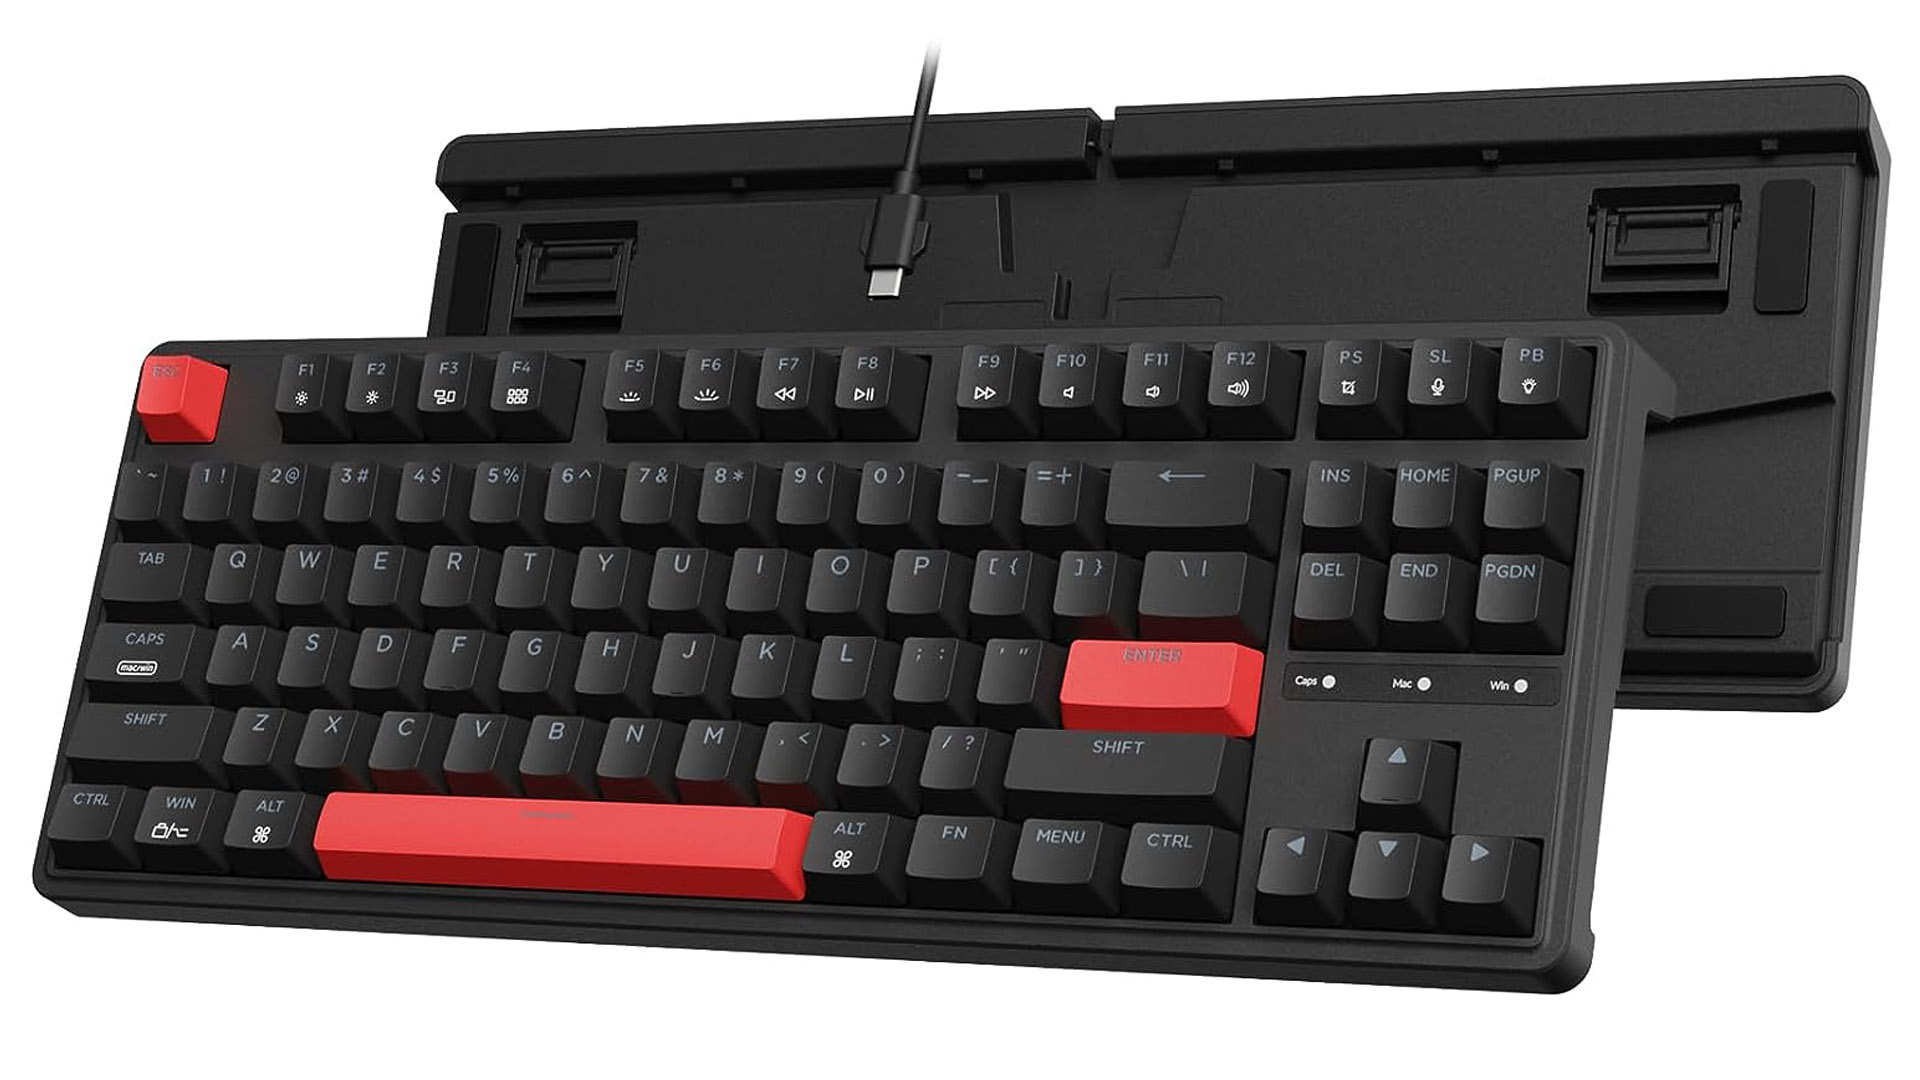 Keychron C3 Pro - Best mechanical keyboard under $50